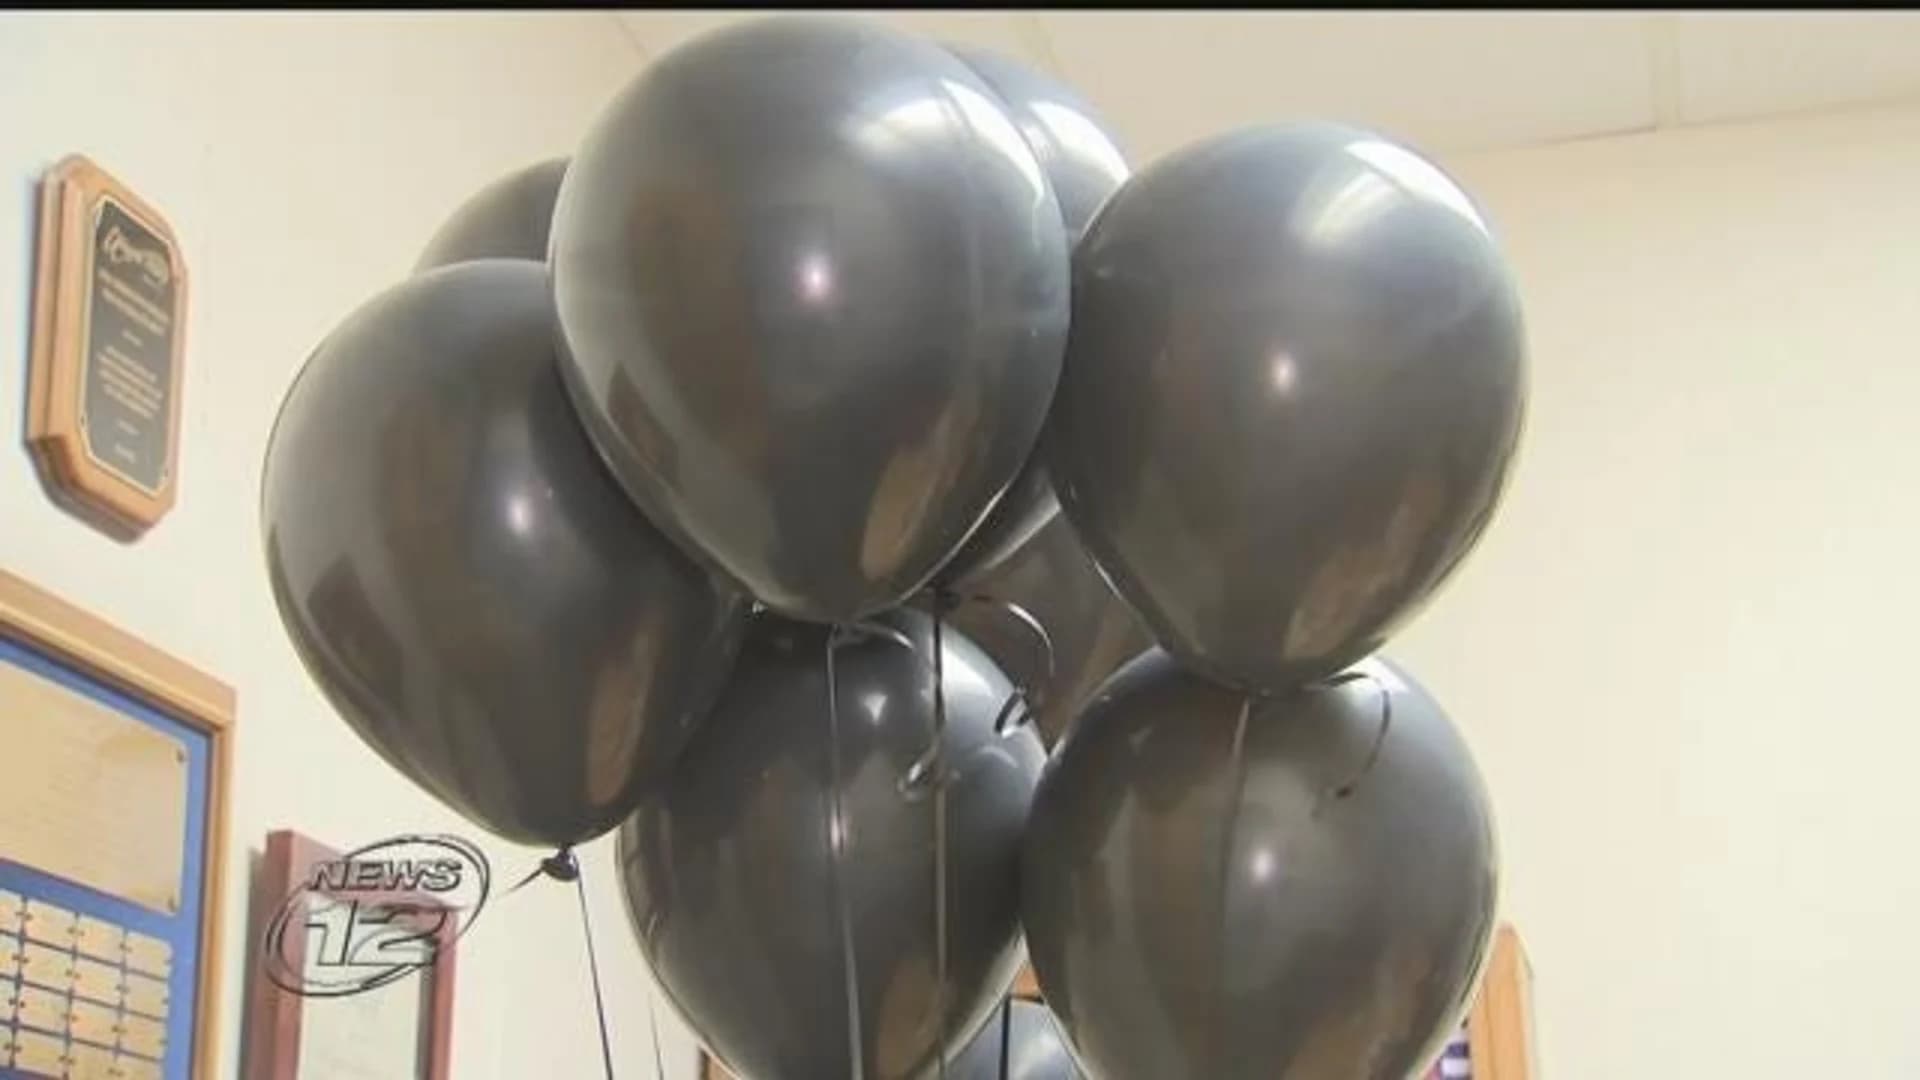 Black Balloon Day seeks to raise awareness about opioid addiction